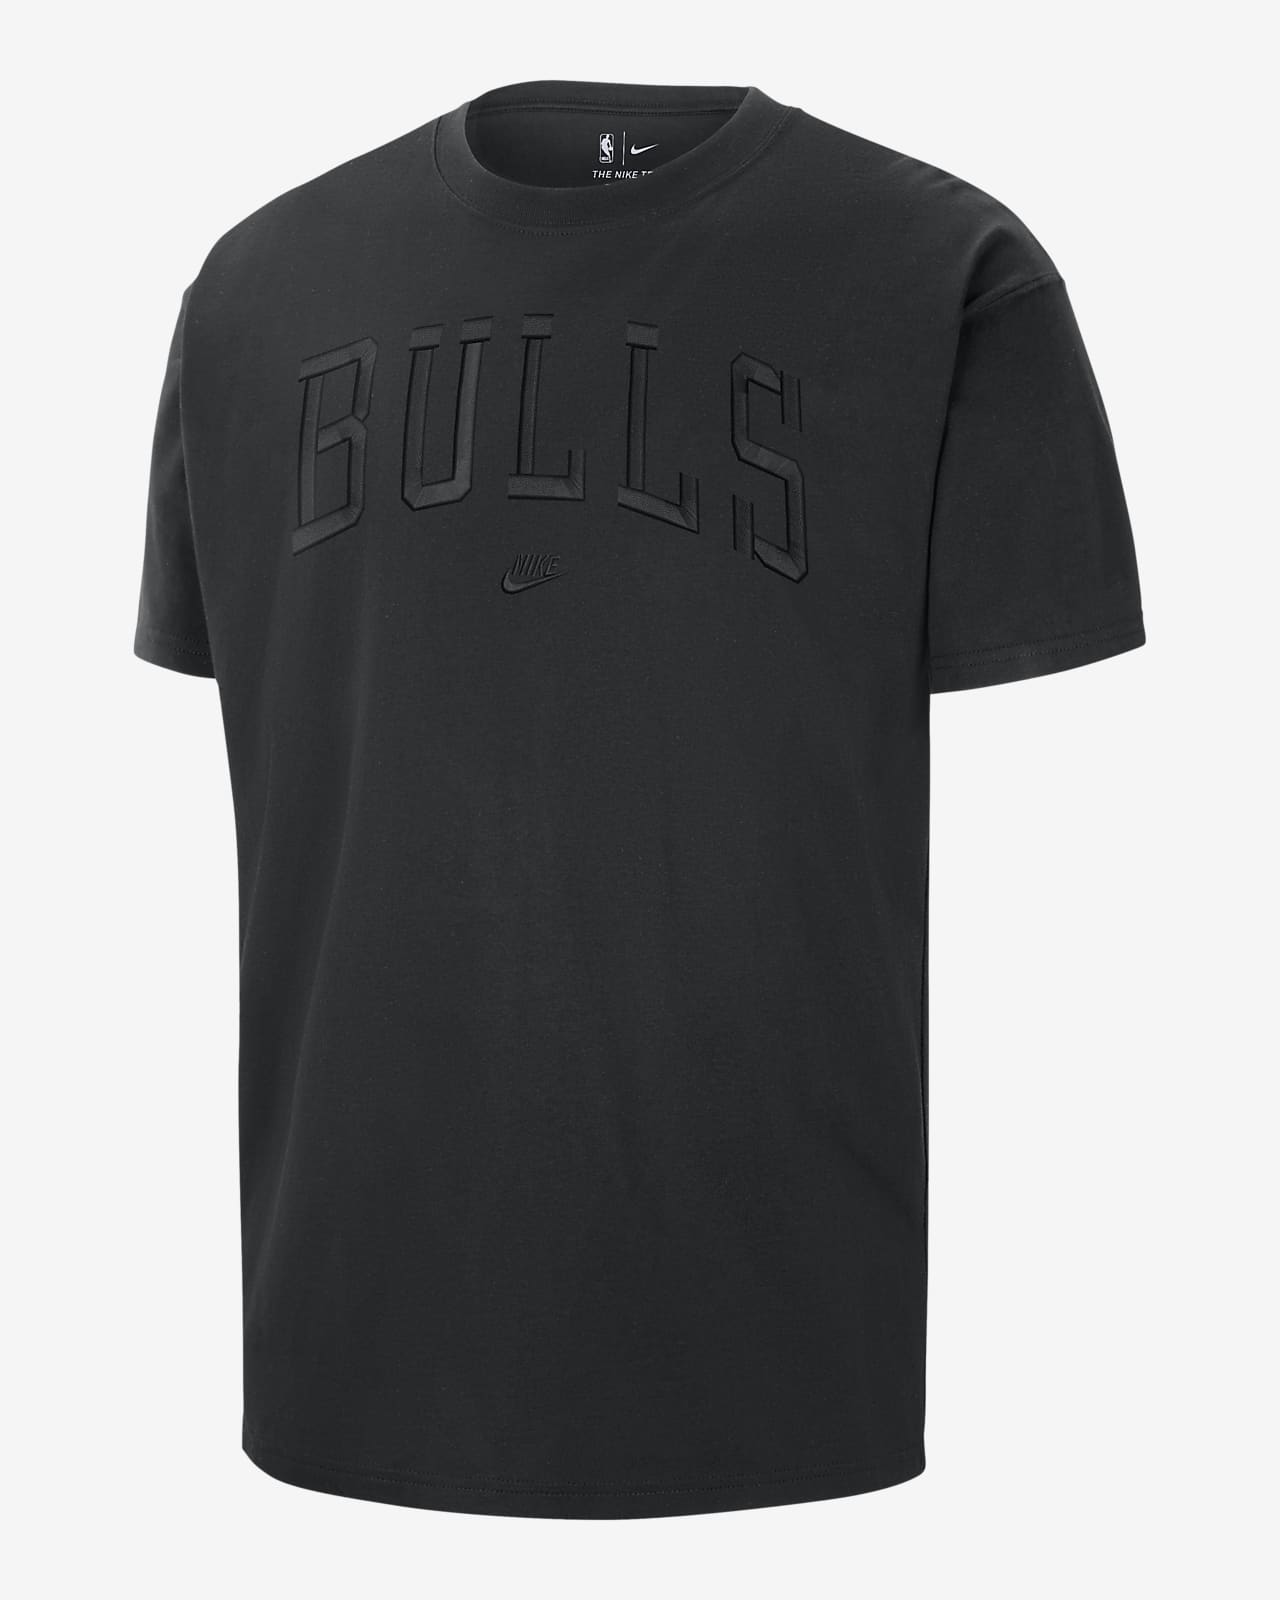 Nike Women's Chicago Bulls White Courtside Cotton T-Shirt, Small